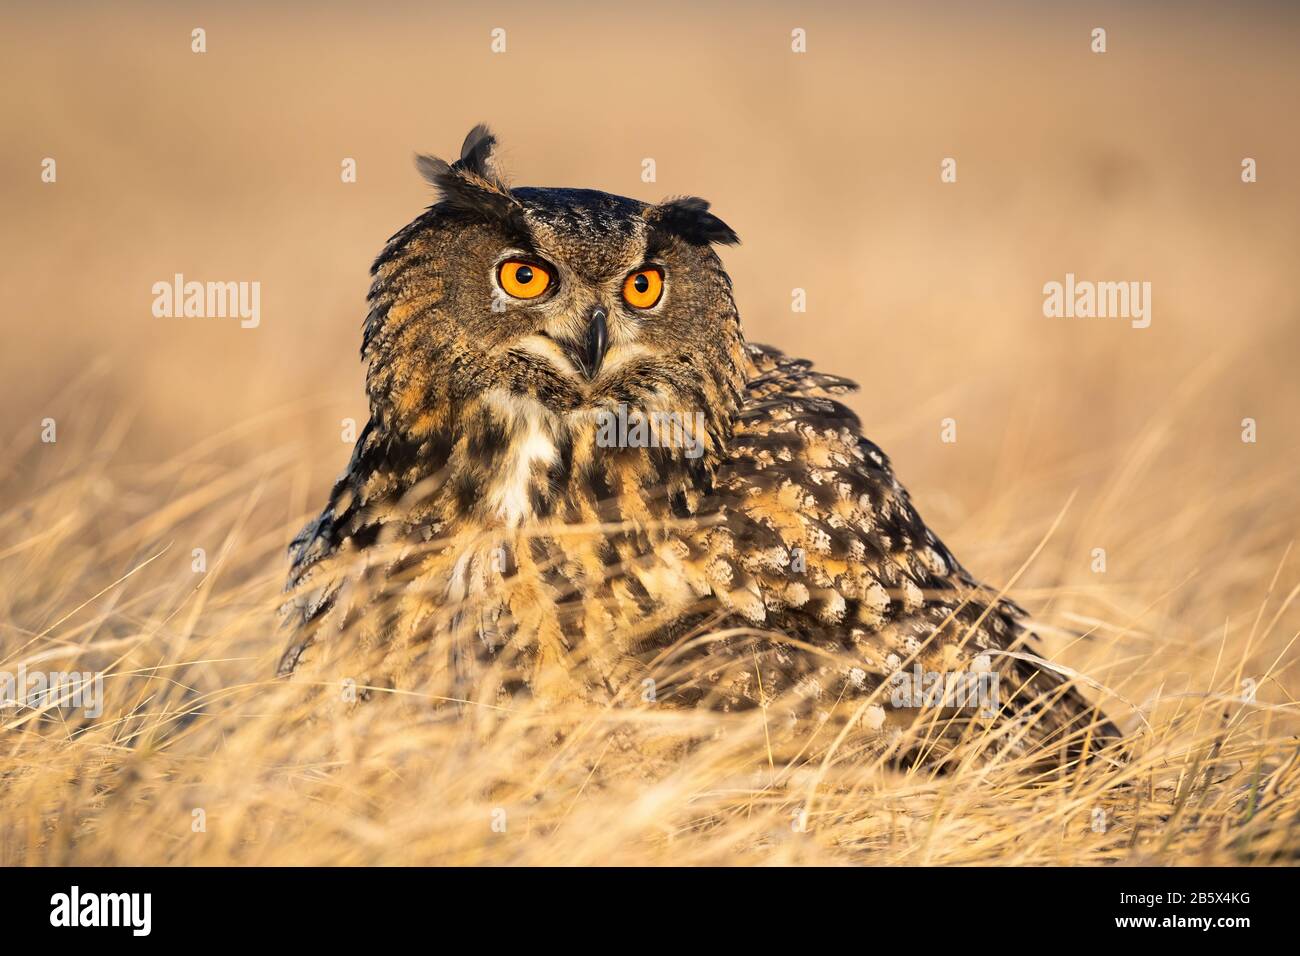 Annoyed eurasian eagle-owl screeching with beak open in grass in autumn. Stock Photo